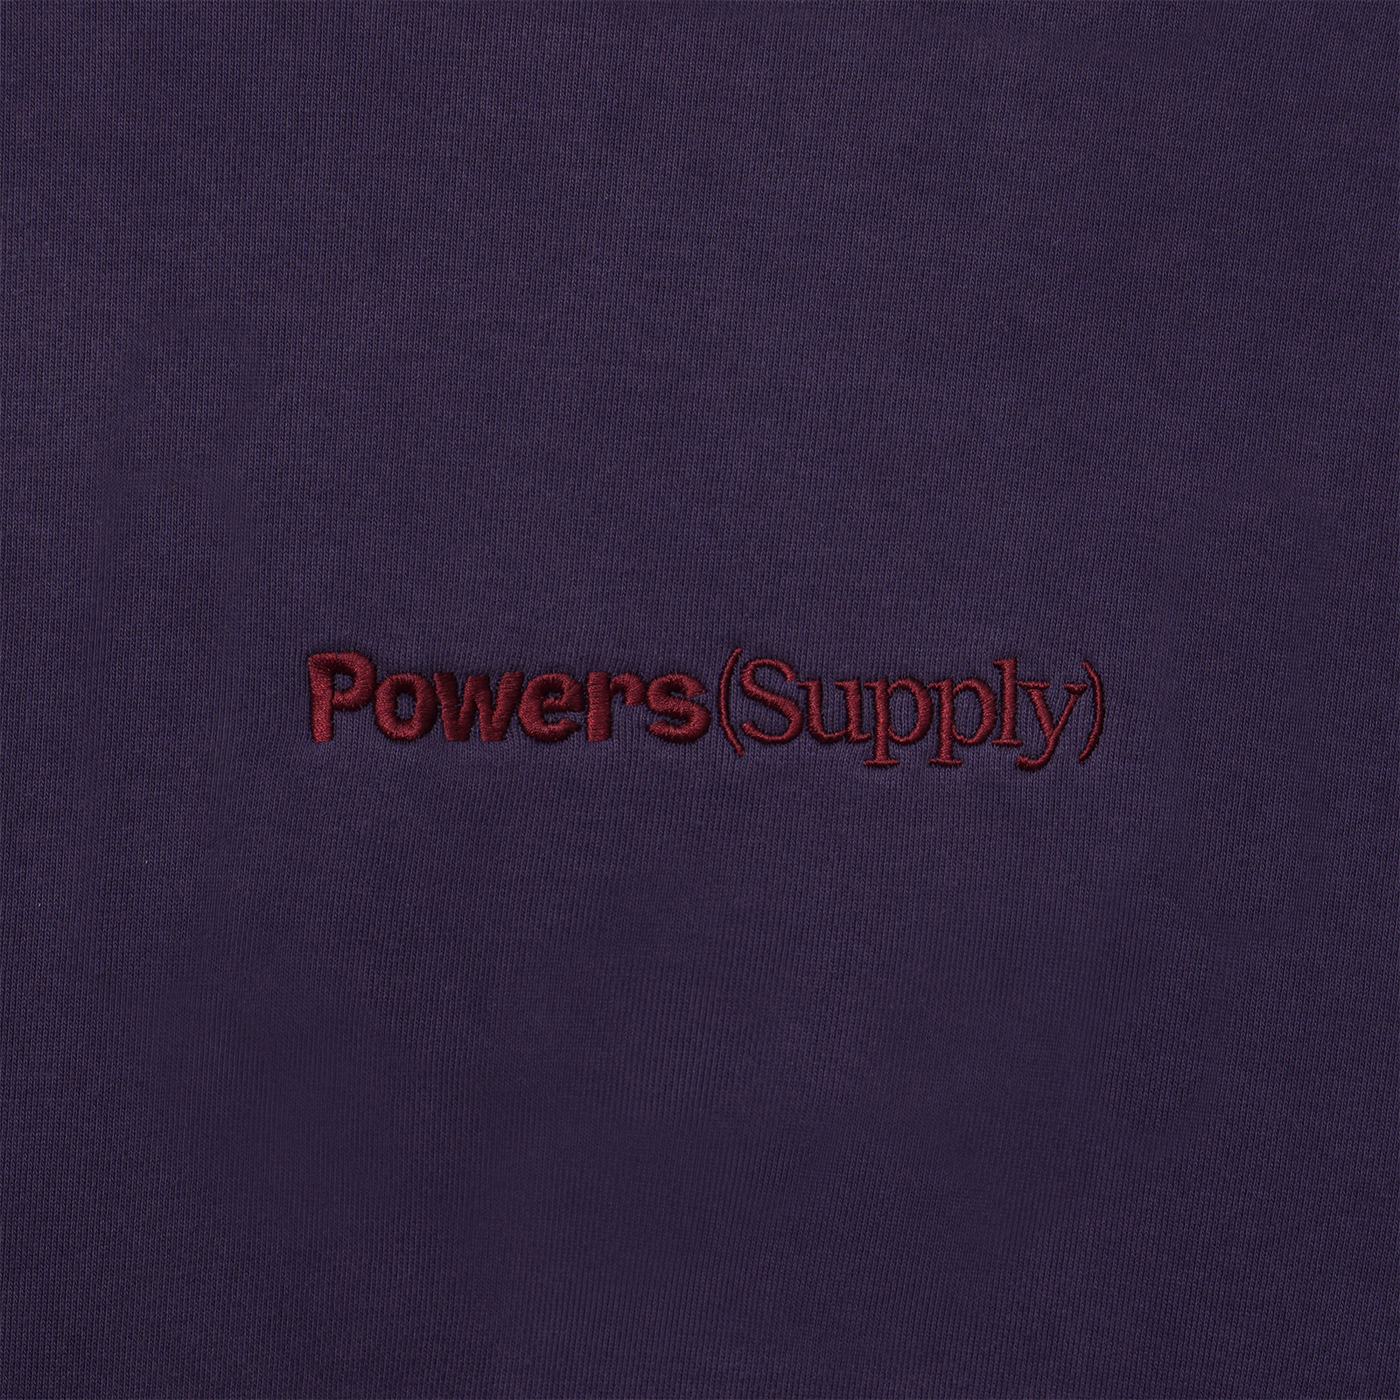 Powers(Supply) New Logo Crewneck